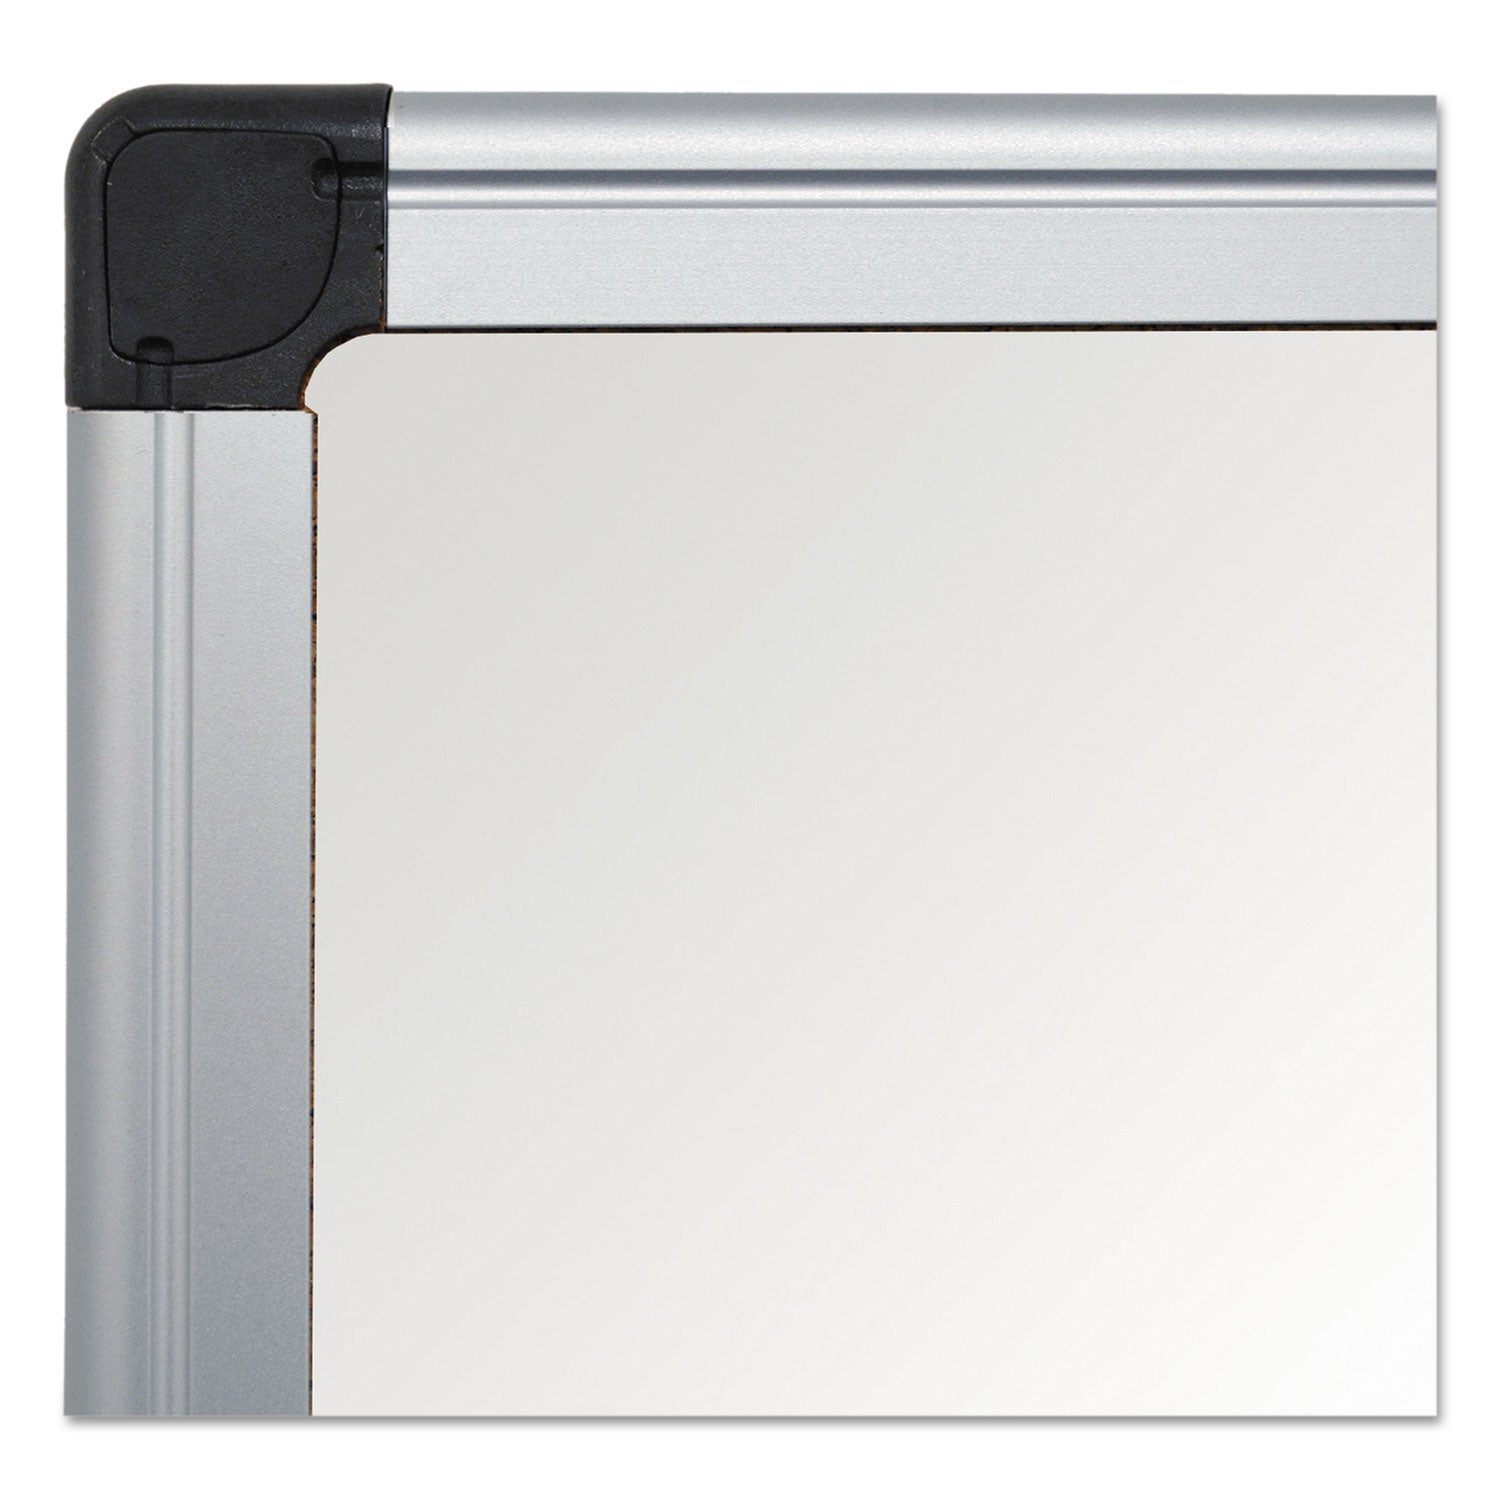 Value Melamine Dry Erase Board, 24 x 36, White Surface, Silver Aluminum Frame - 